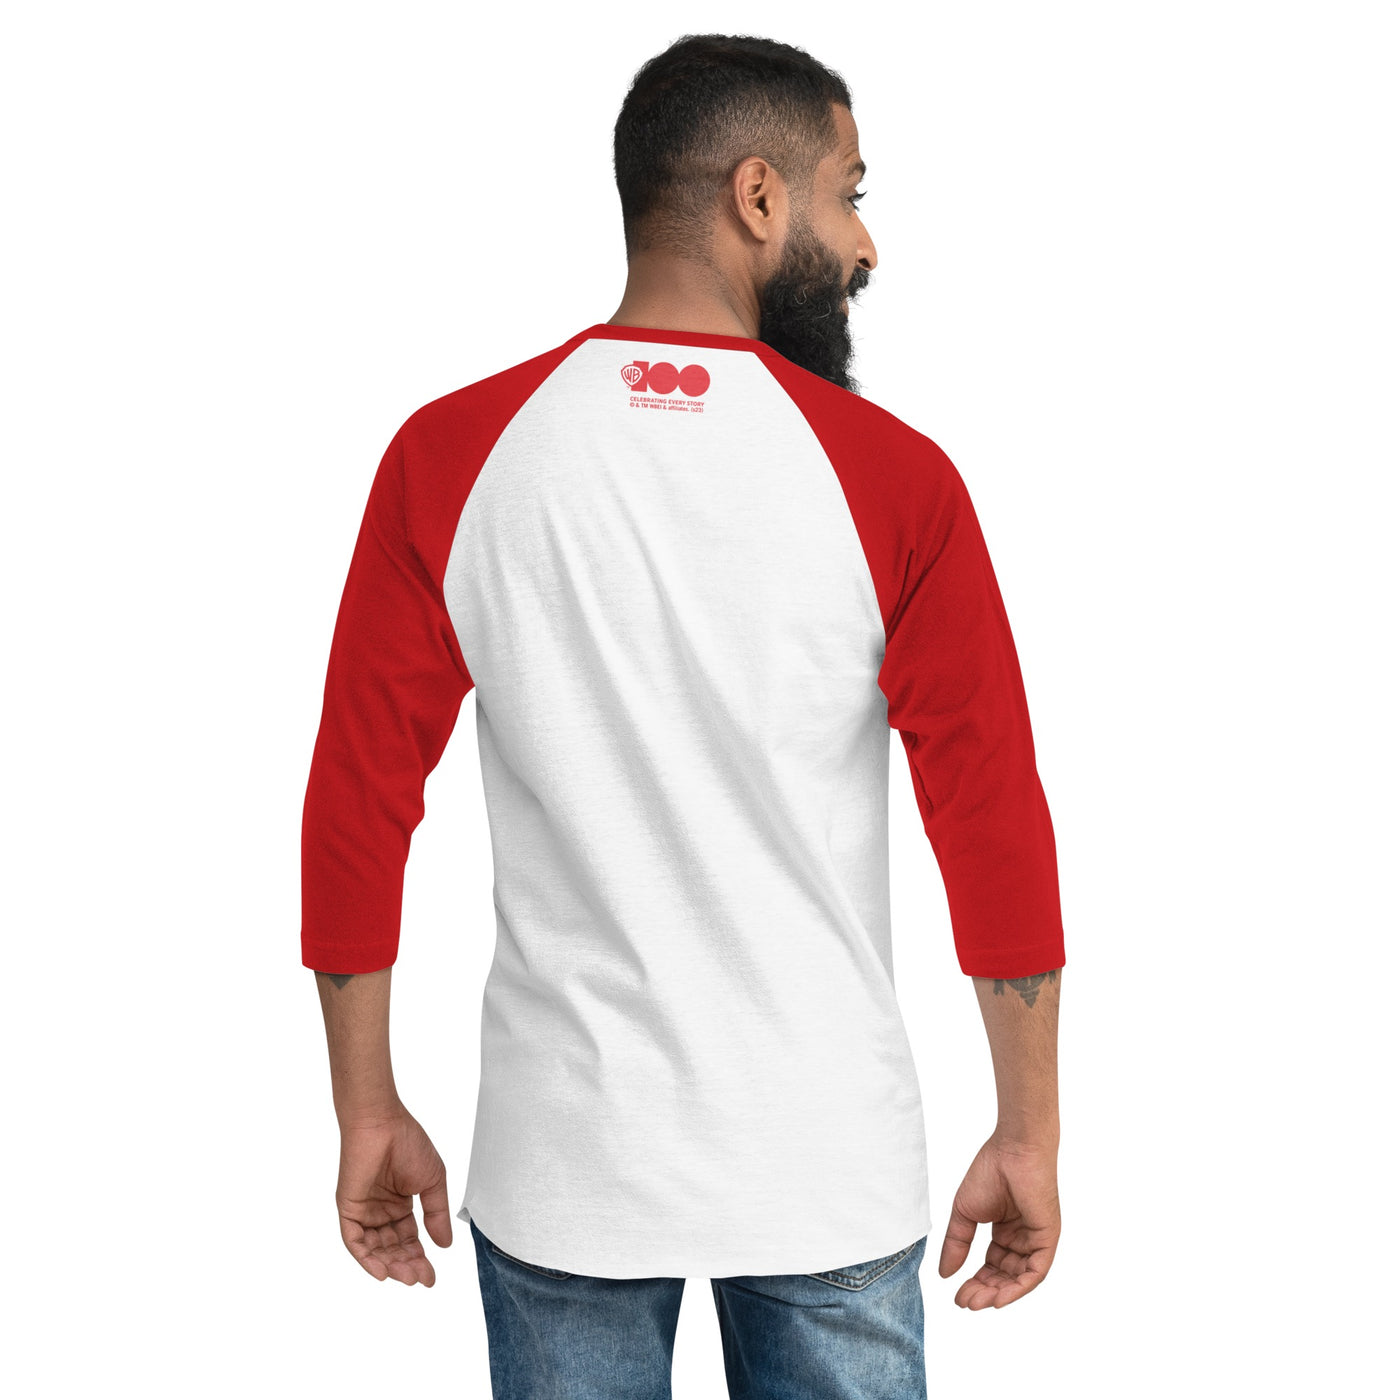 WB 100 Space Jam 3/4 Sleeve Raglan T-Shirt